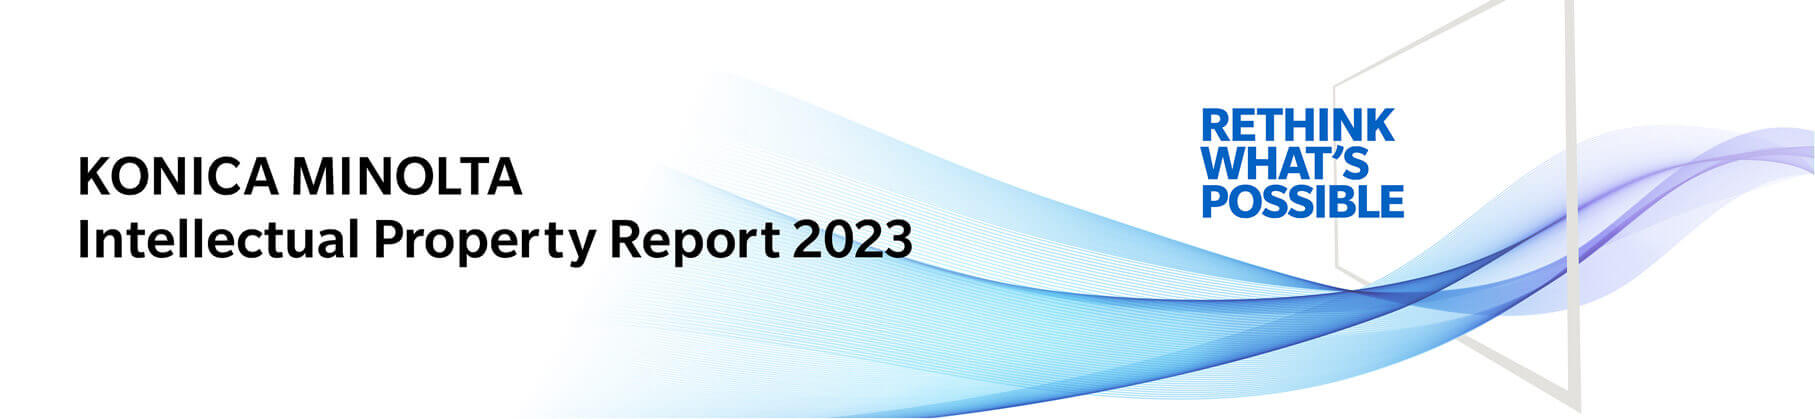 KONICAMINOLTA Intellectual Property Report 2023